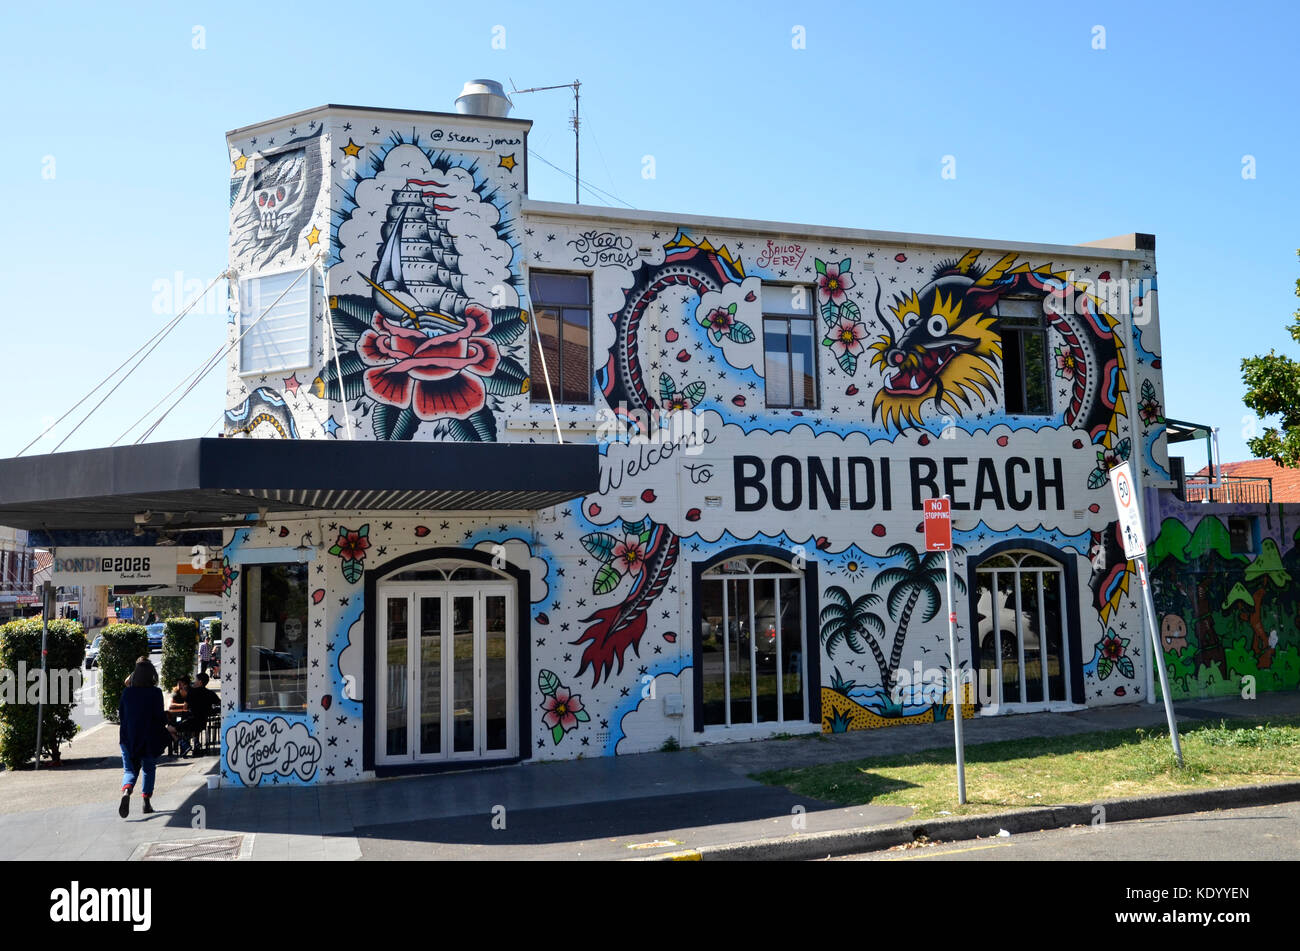 Street art on a café in Bondi, Sydney welcoming visitors to Bondi Beach Stock Photo